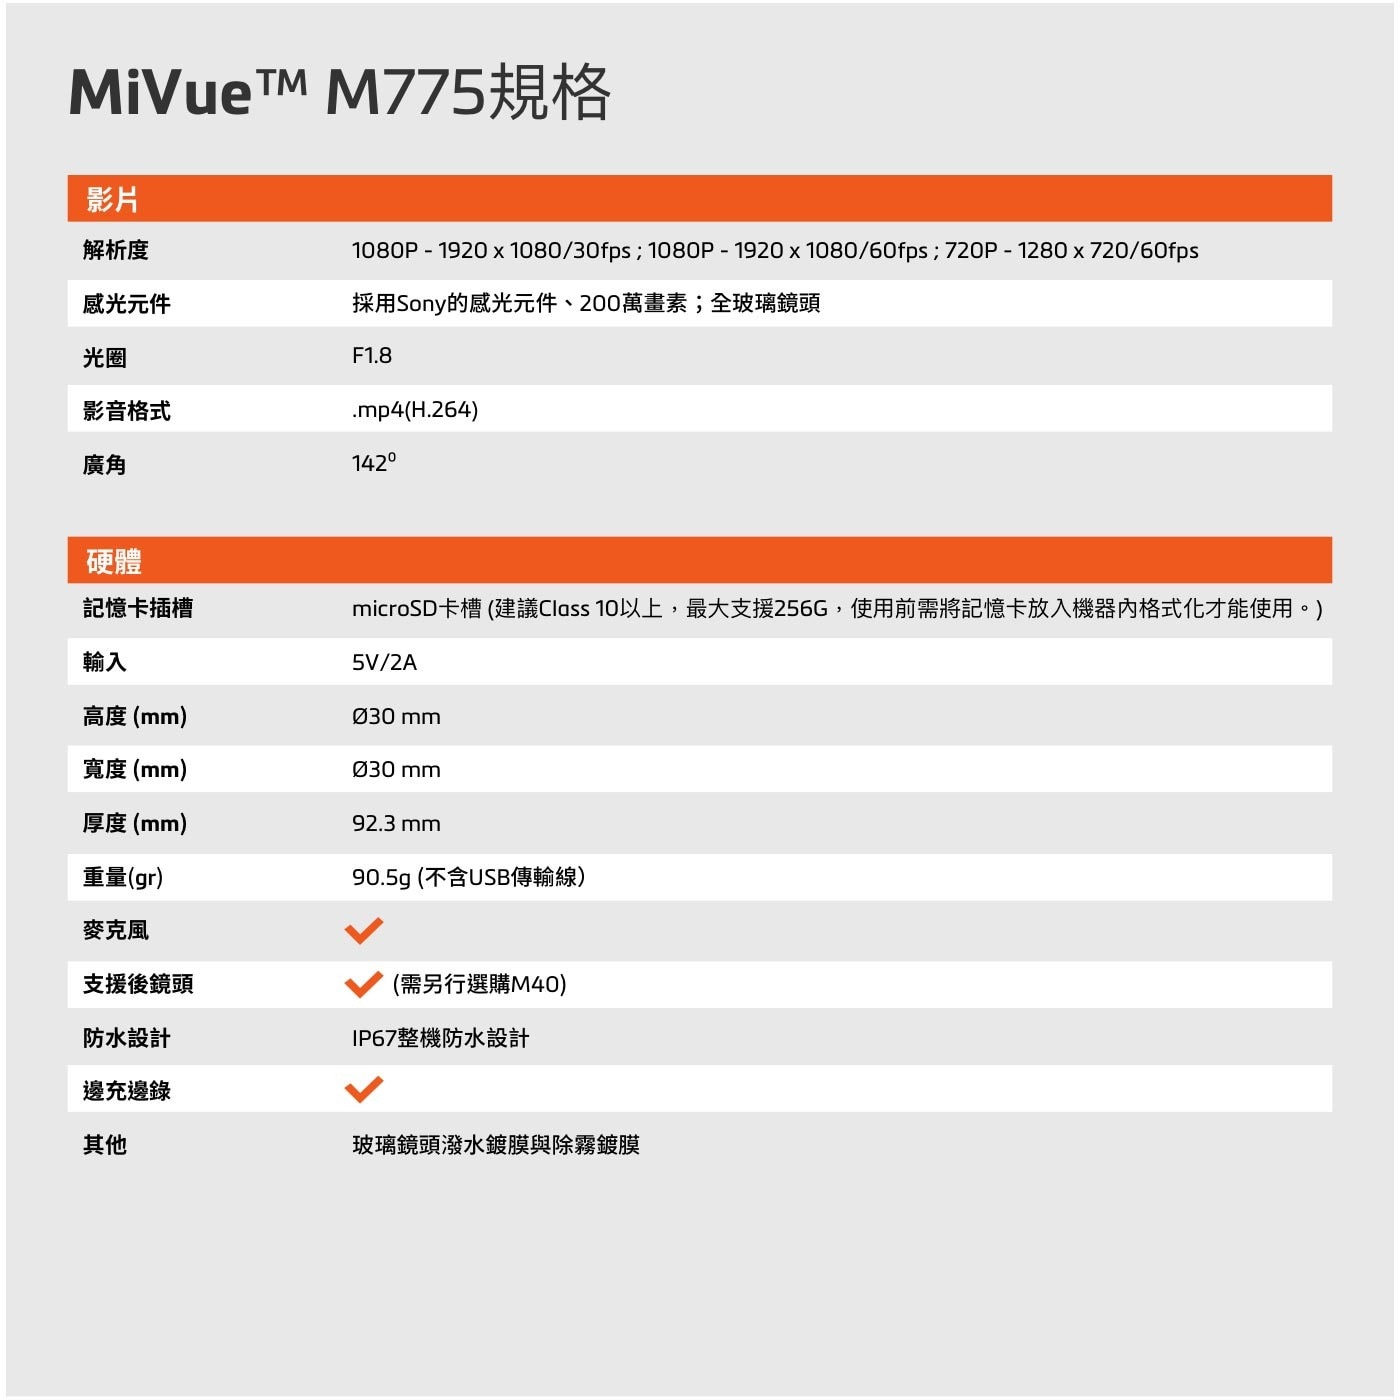 Mio MiVue M775 大光圈機車行車紀錄器，採用Sony的感光元件，採用鏡頭大廠感光元件，強化夜間拍攝效果，提供更清晰的夜晚拍攝品質。色彩更飽滿艷麗，降低雜訊，瞬間停格的清晰度更佳。